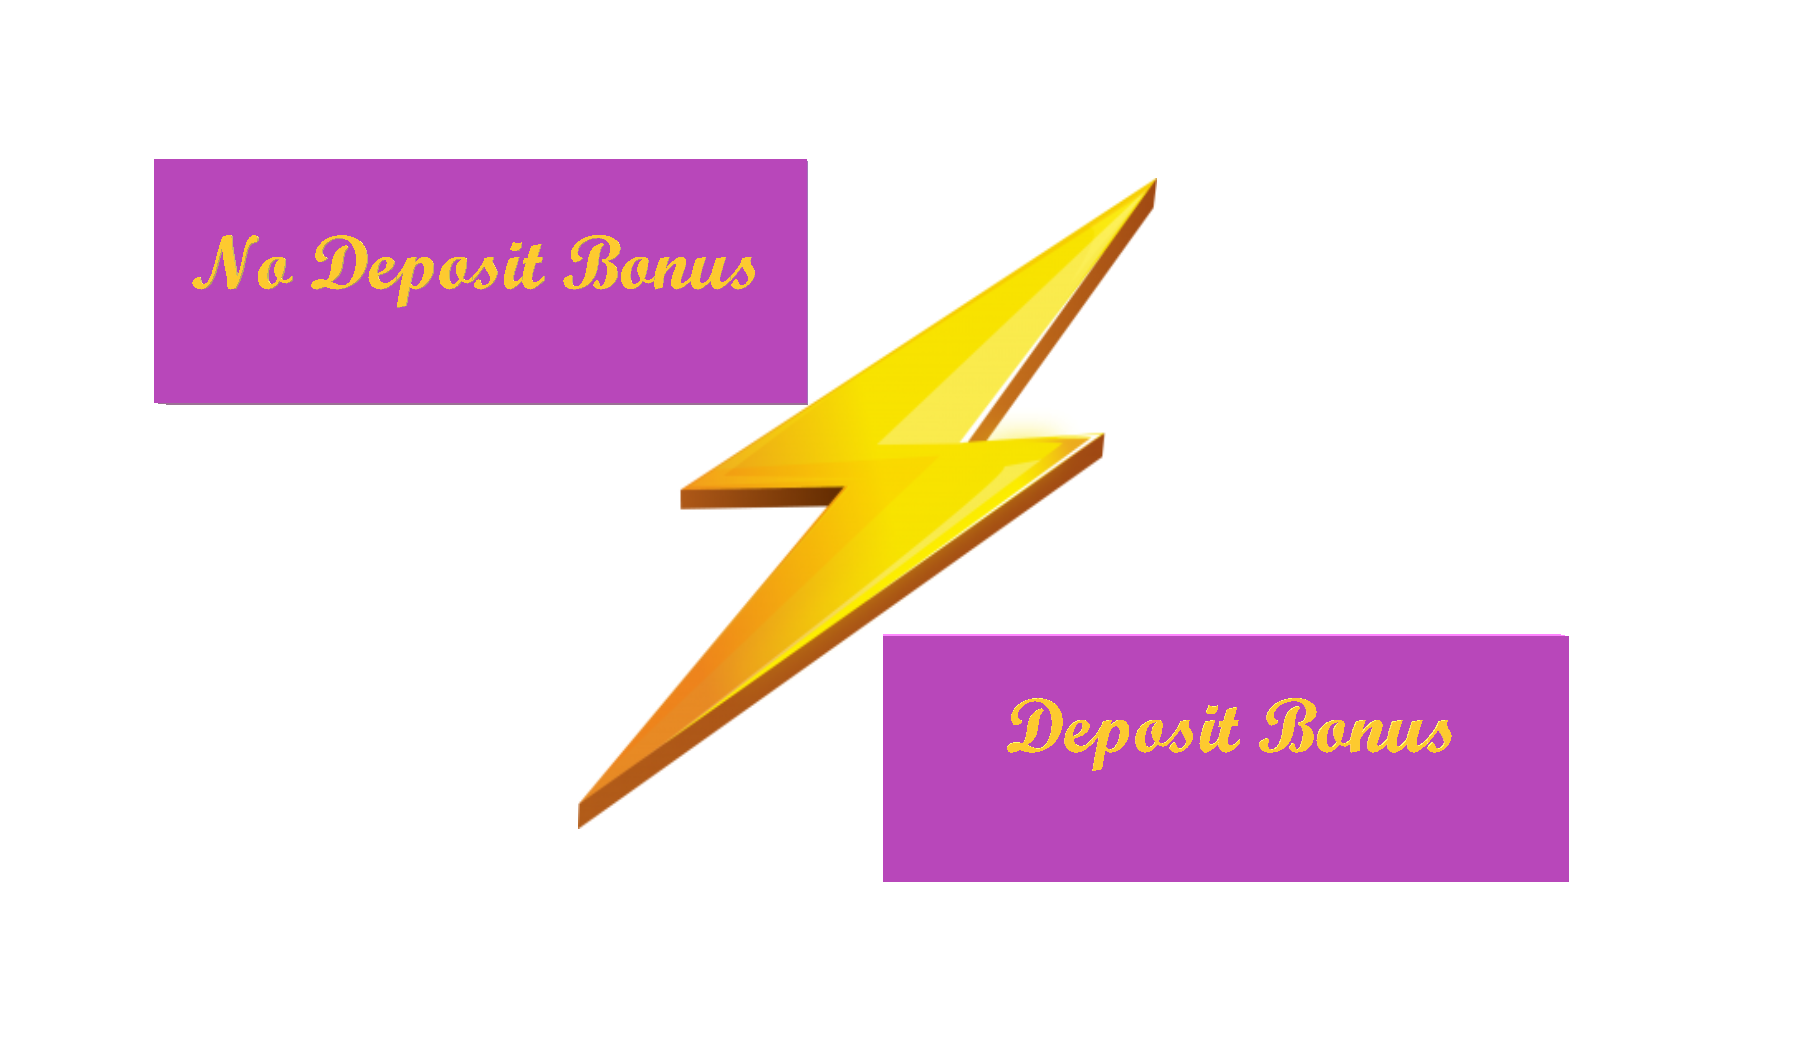 No-Deposit Bonus vs Deposit Bonus: What are the major differences?